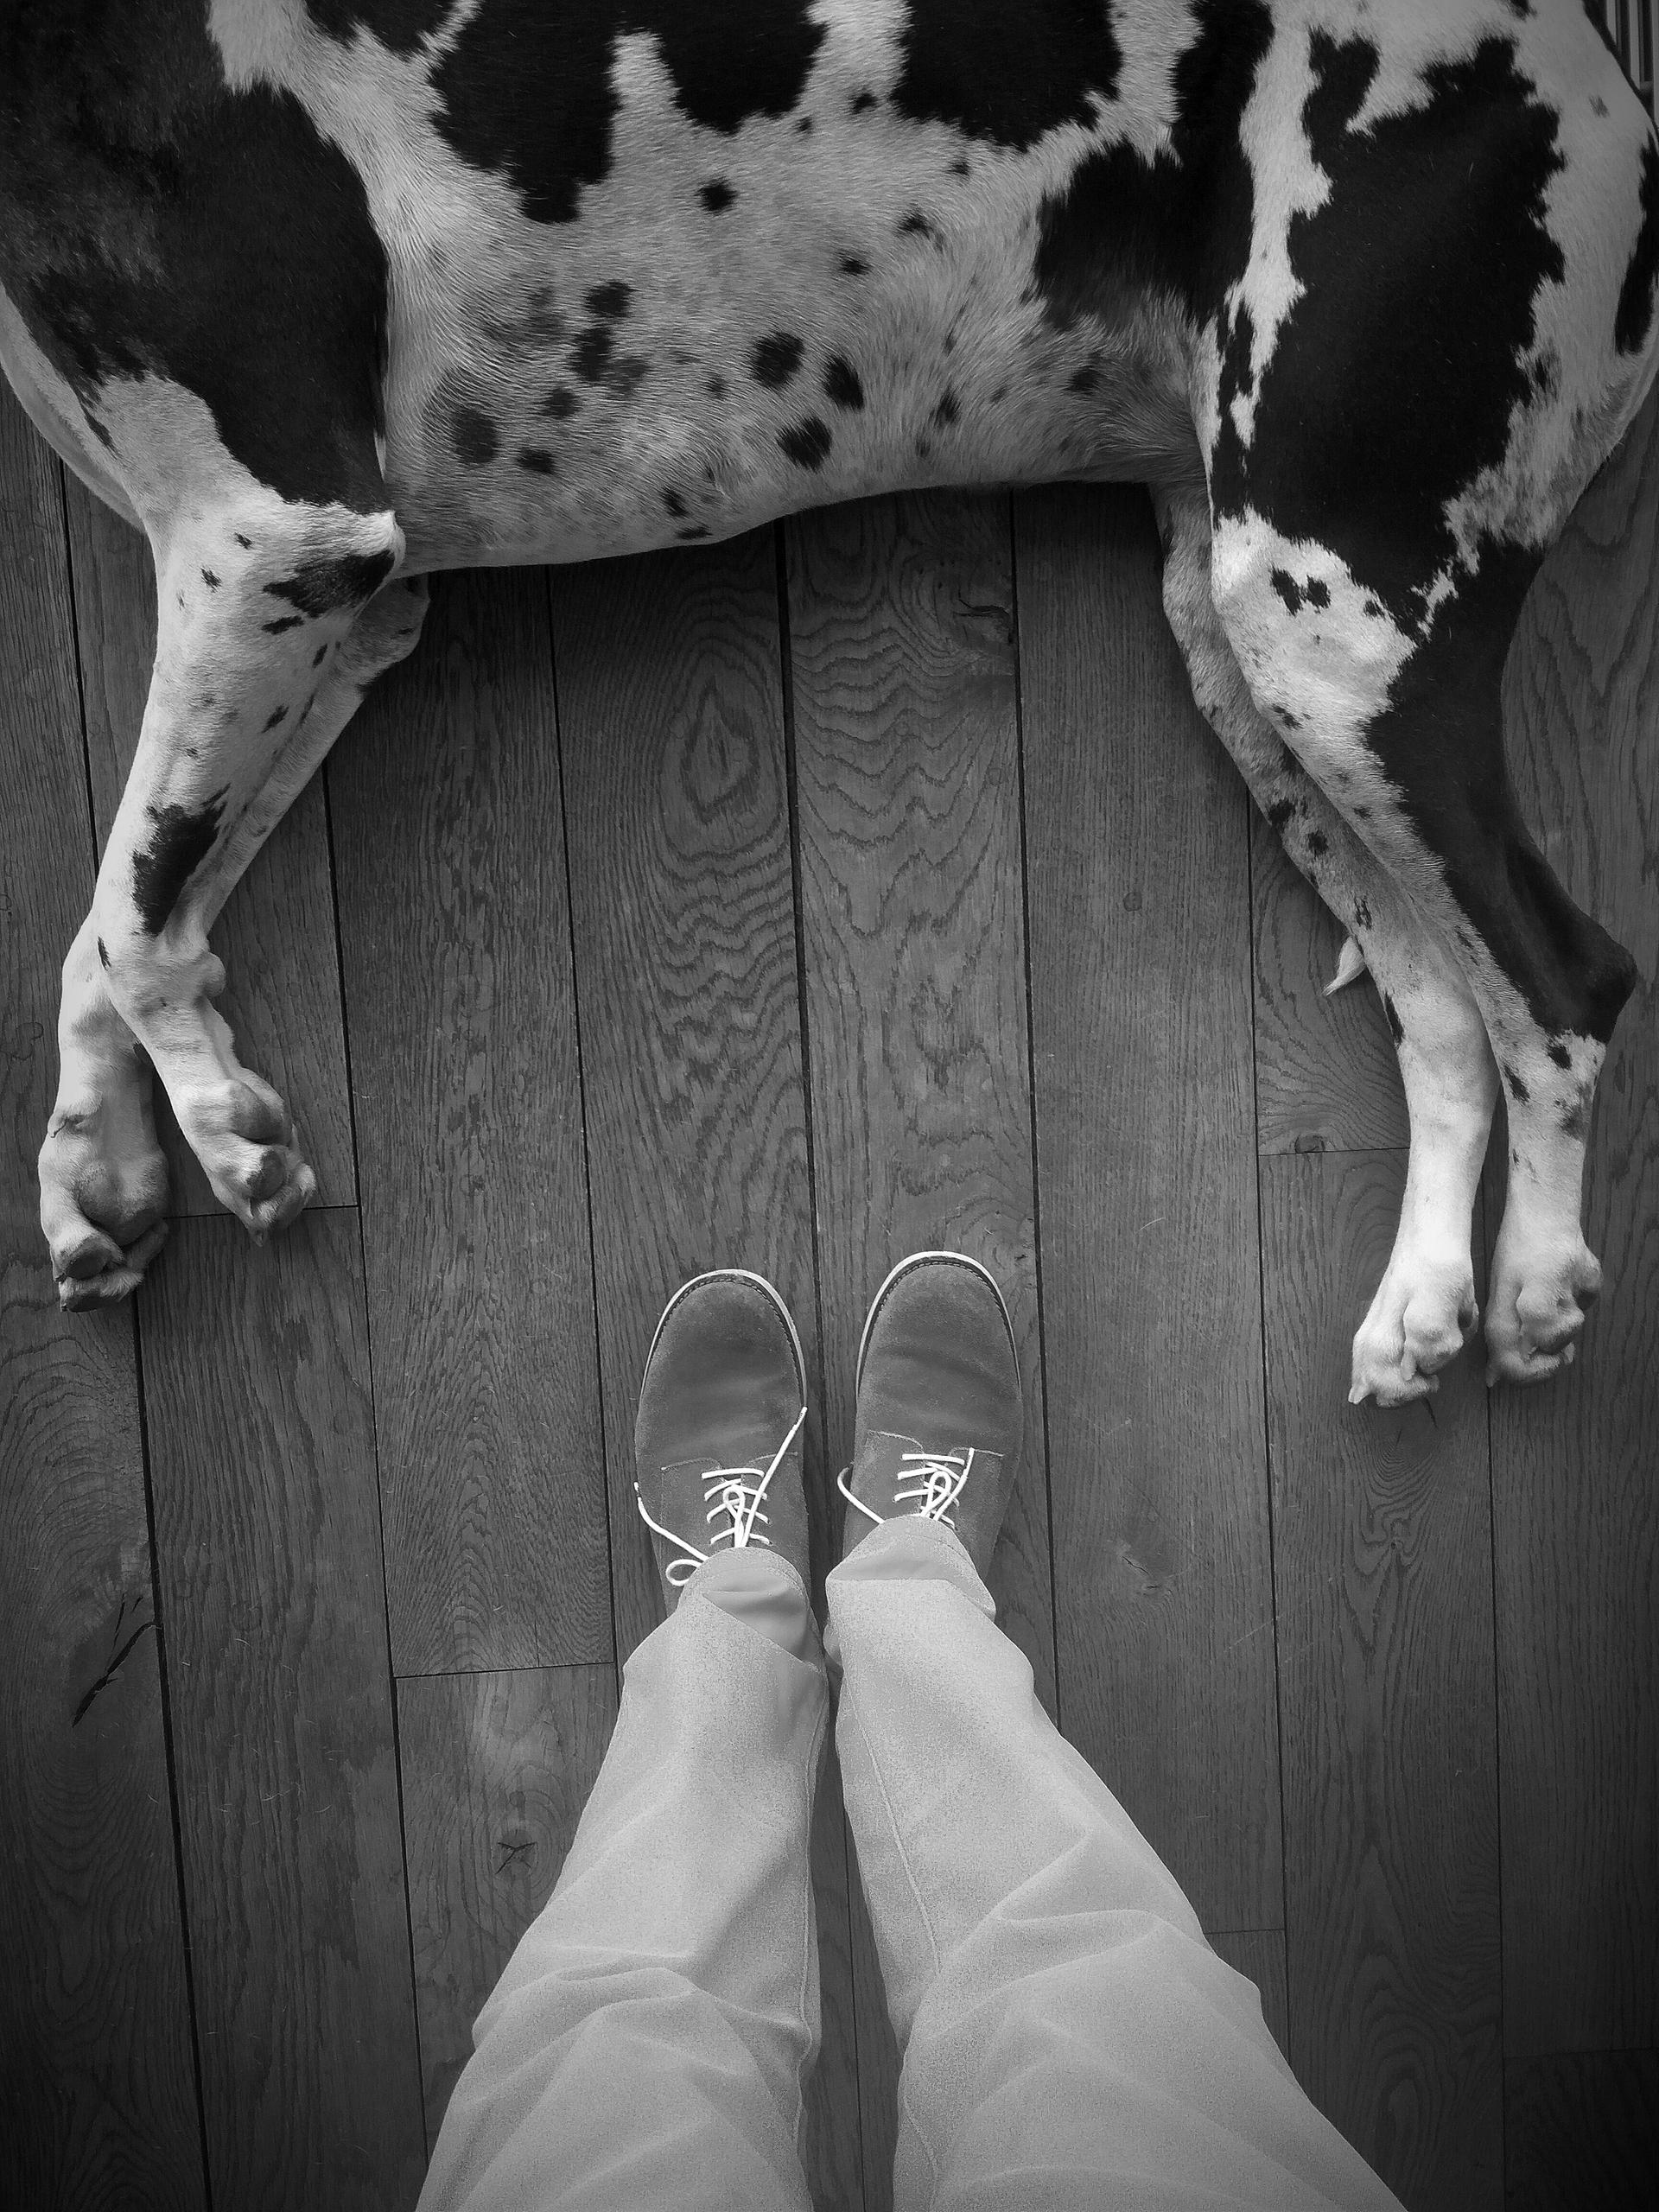 Feet and Dog